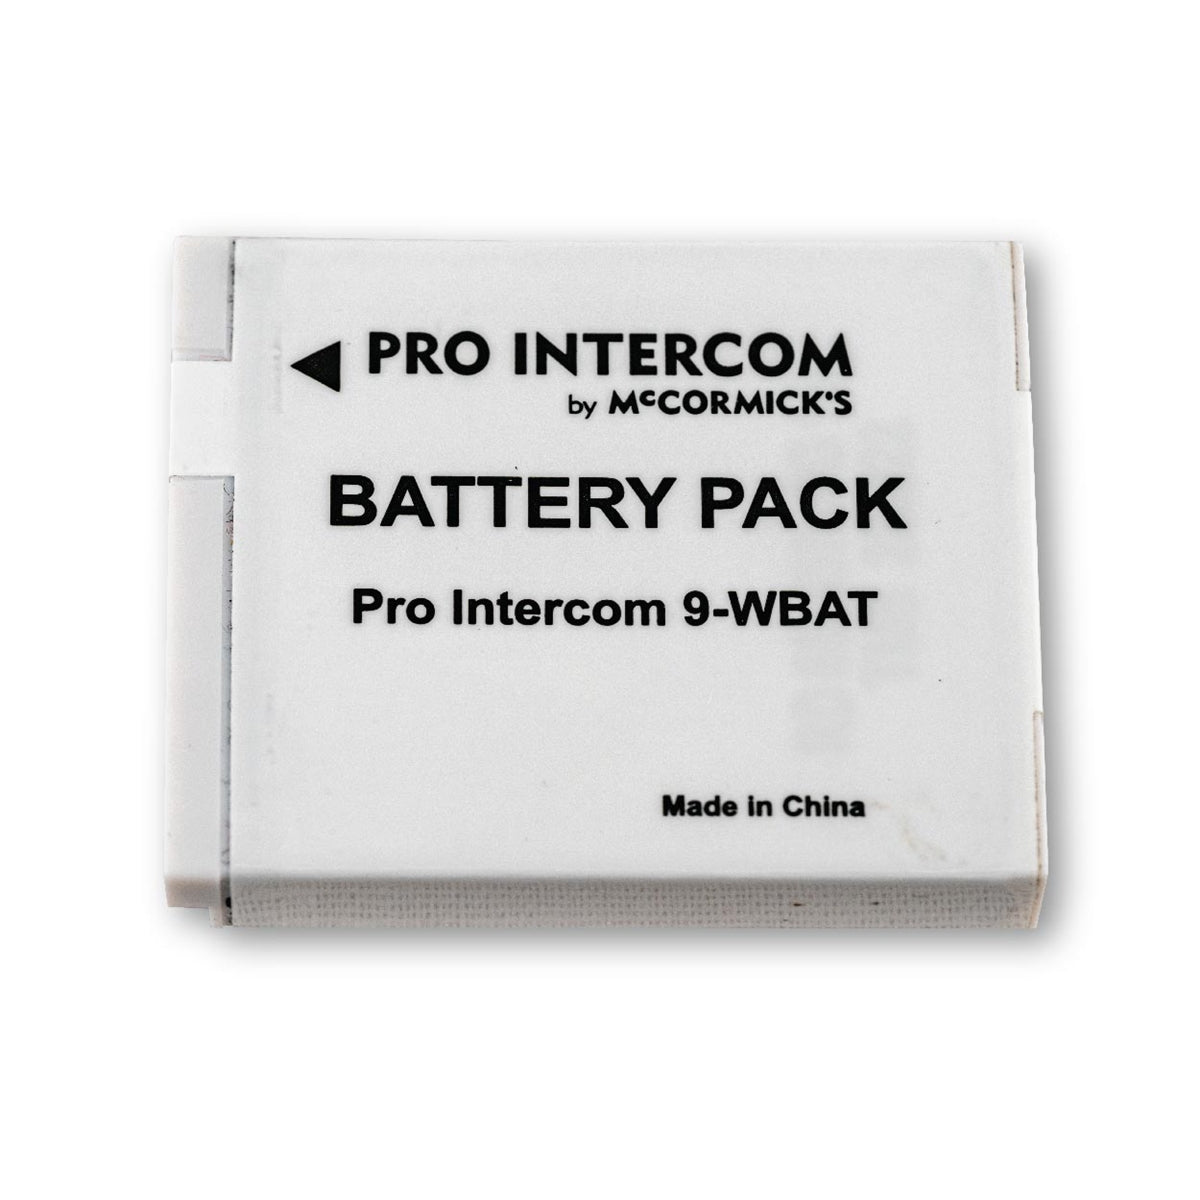 Pro Intercom 9-WBAT - Wireless Intercom Replacement Battery Pack